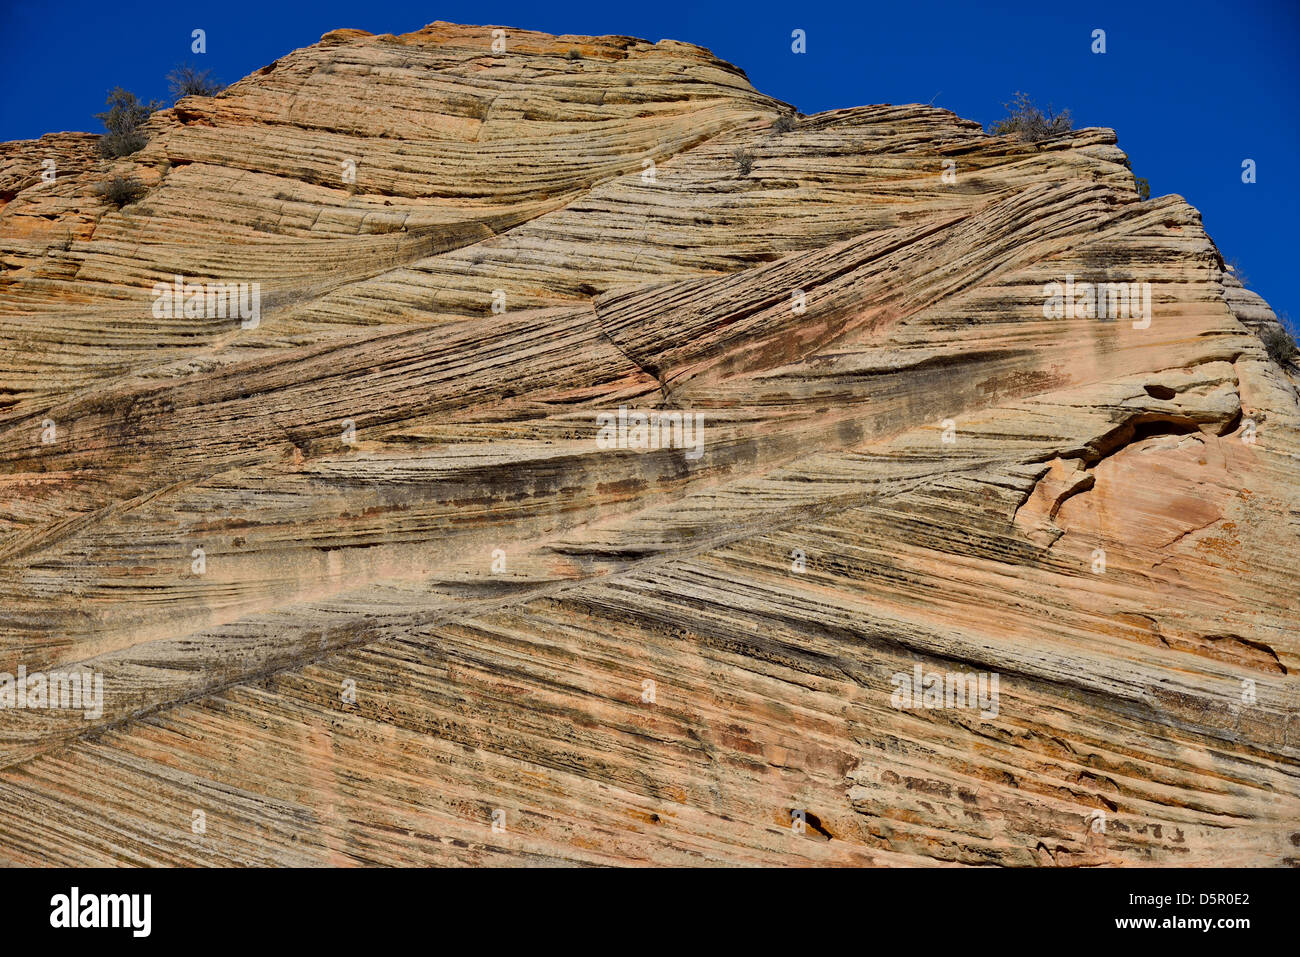 Cross beds of aeolian sandstone. Zion National Park, Utah, USA. Stock Photo